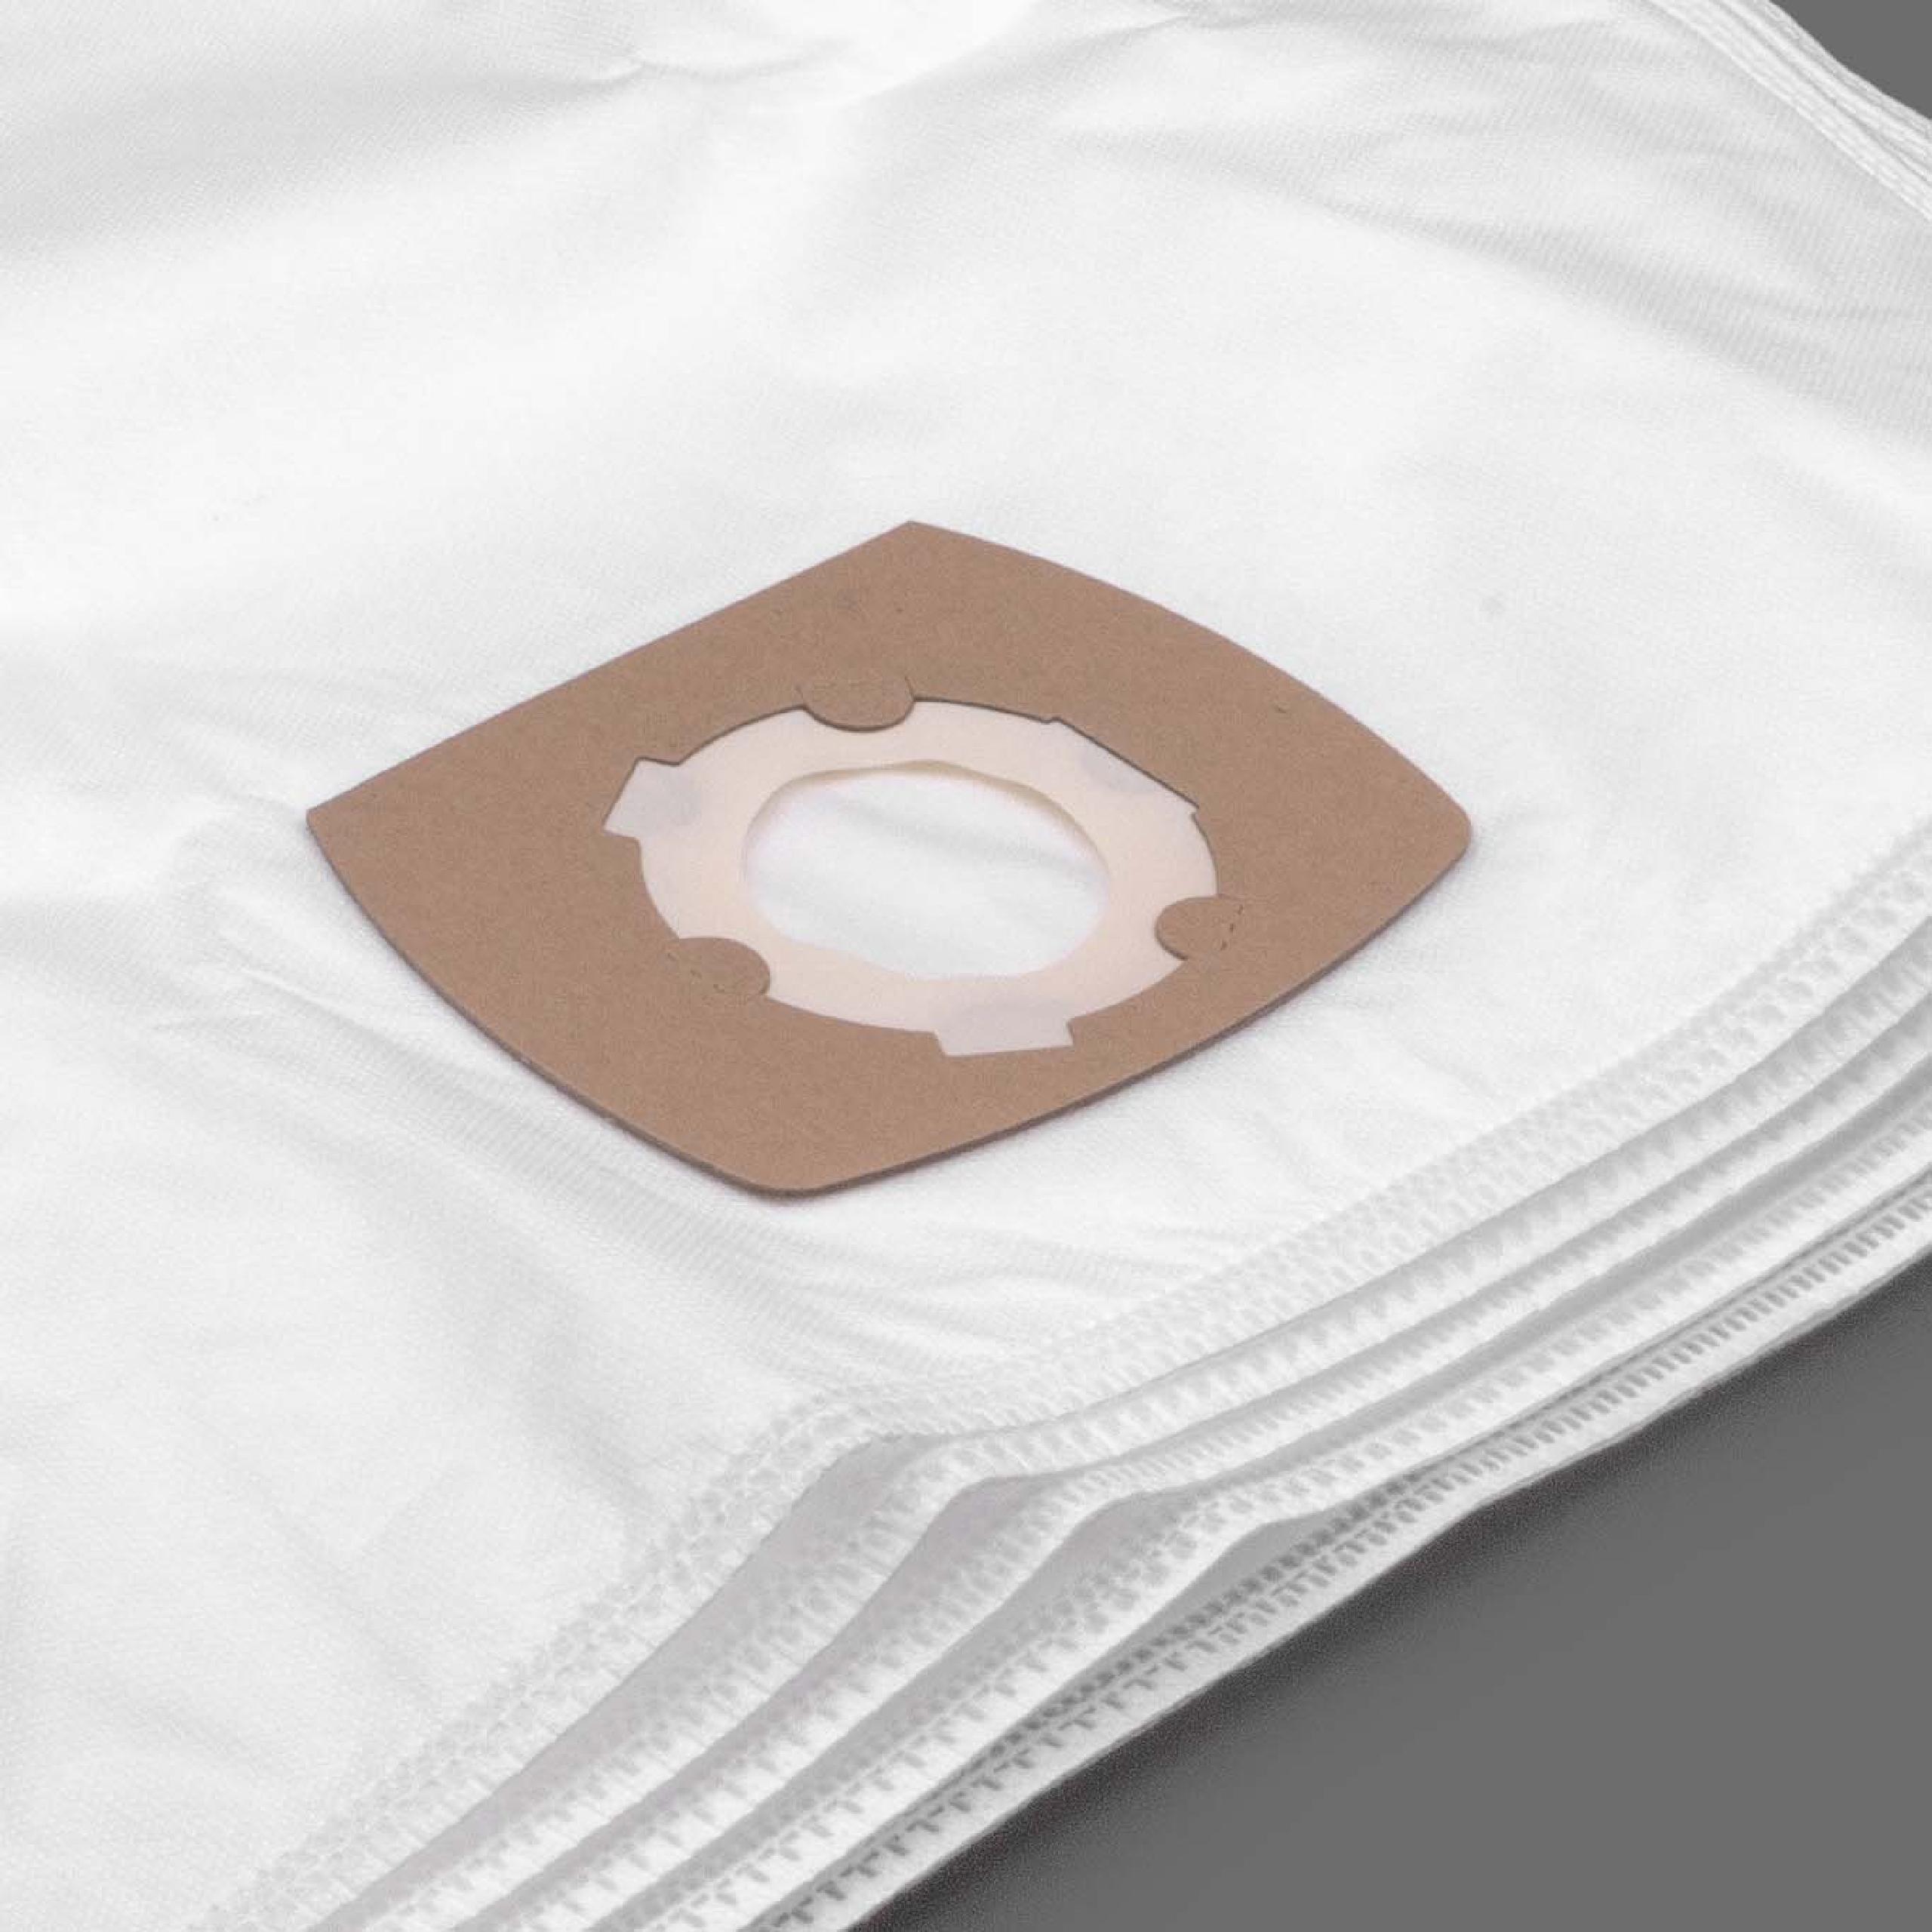 5x Vacuum Cleaner Bag replaces Grundig type G - hygiene bag for Satrap - microfleece